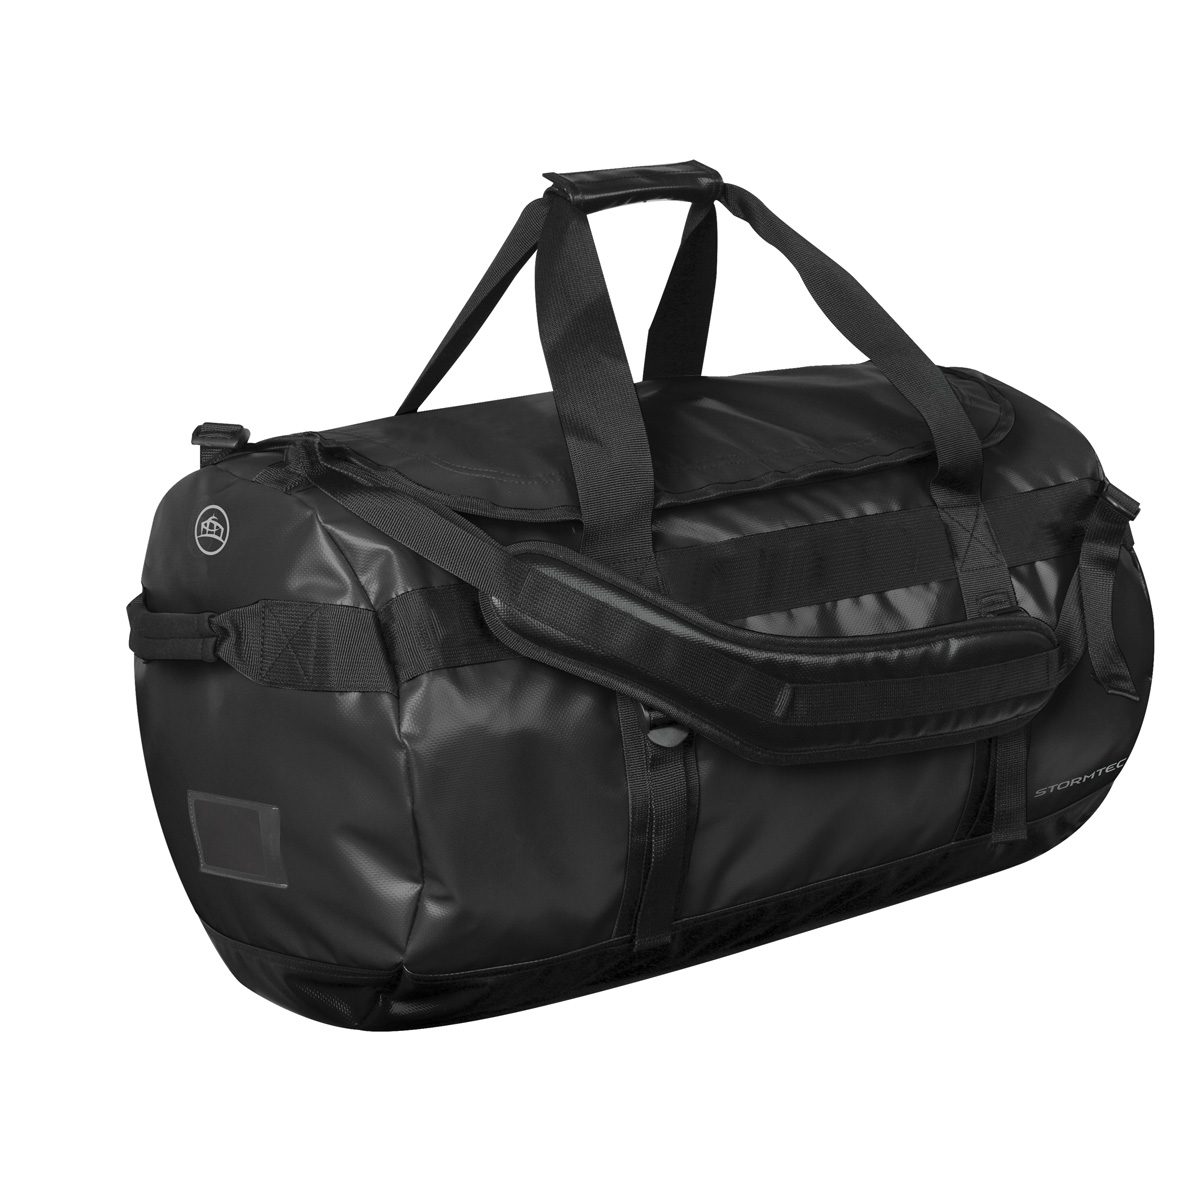 Stormtech Atlantis Waterproof Gear Bag - Large #GBW-1LLE Black